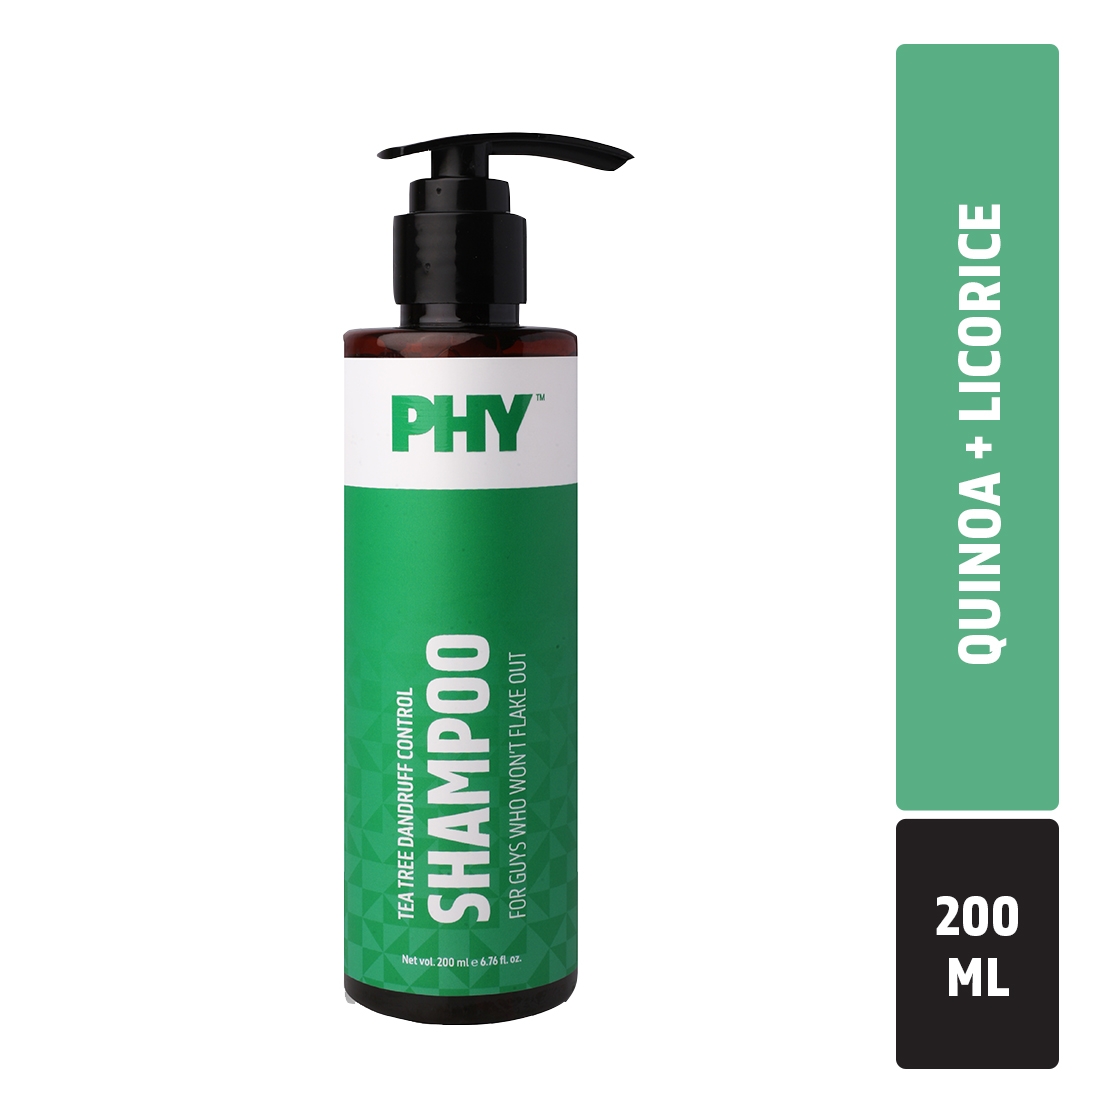 Phy | Phy Tea Tree Dandruff Control Shampoo